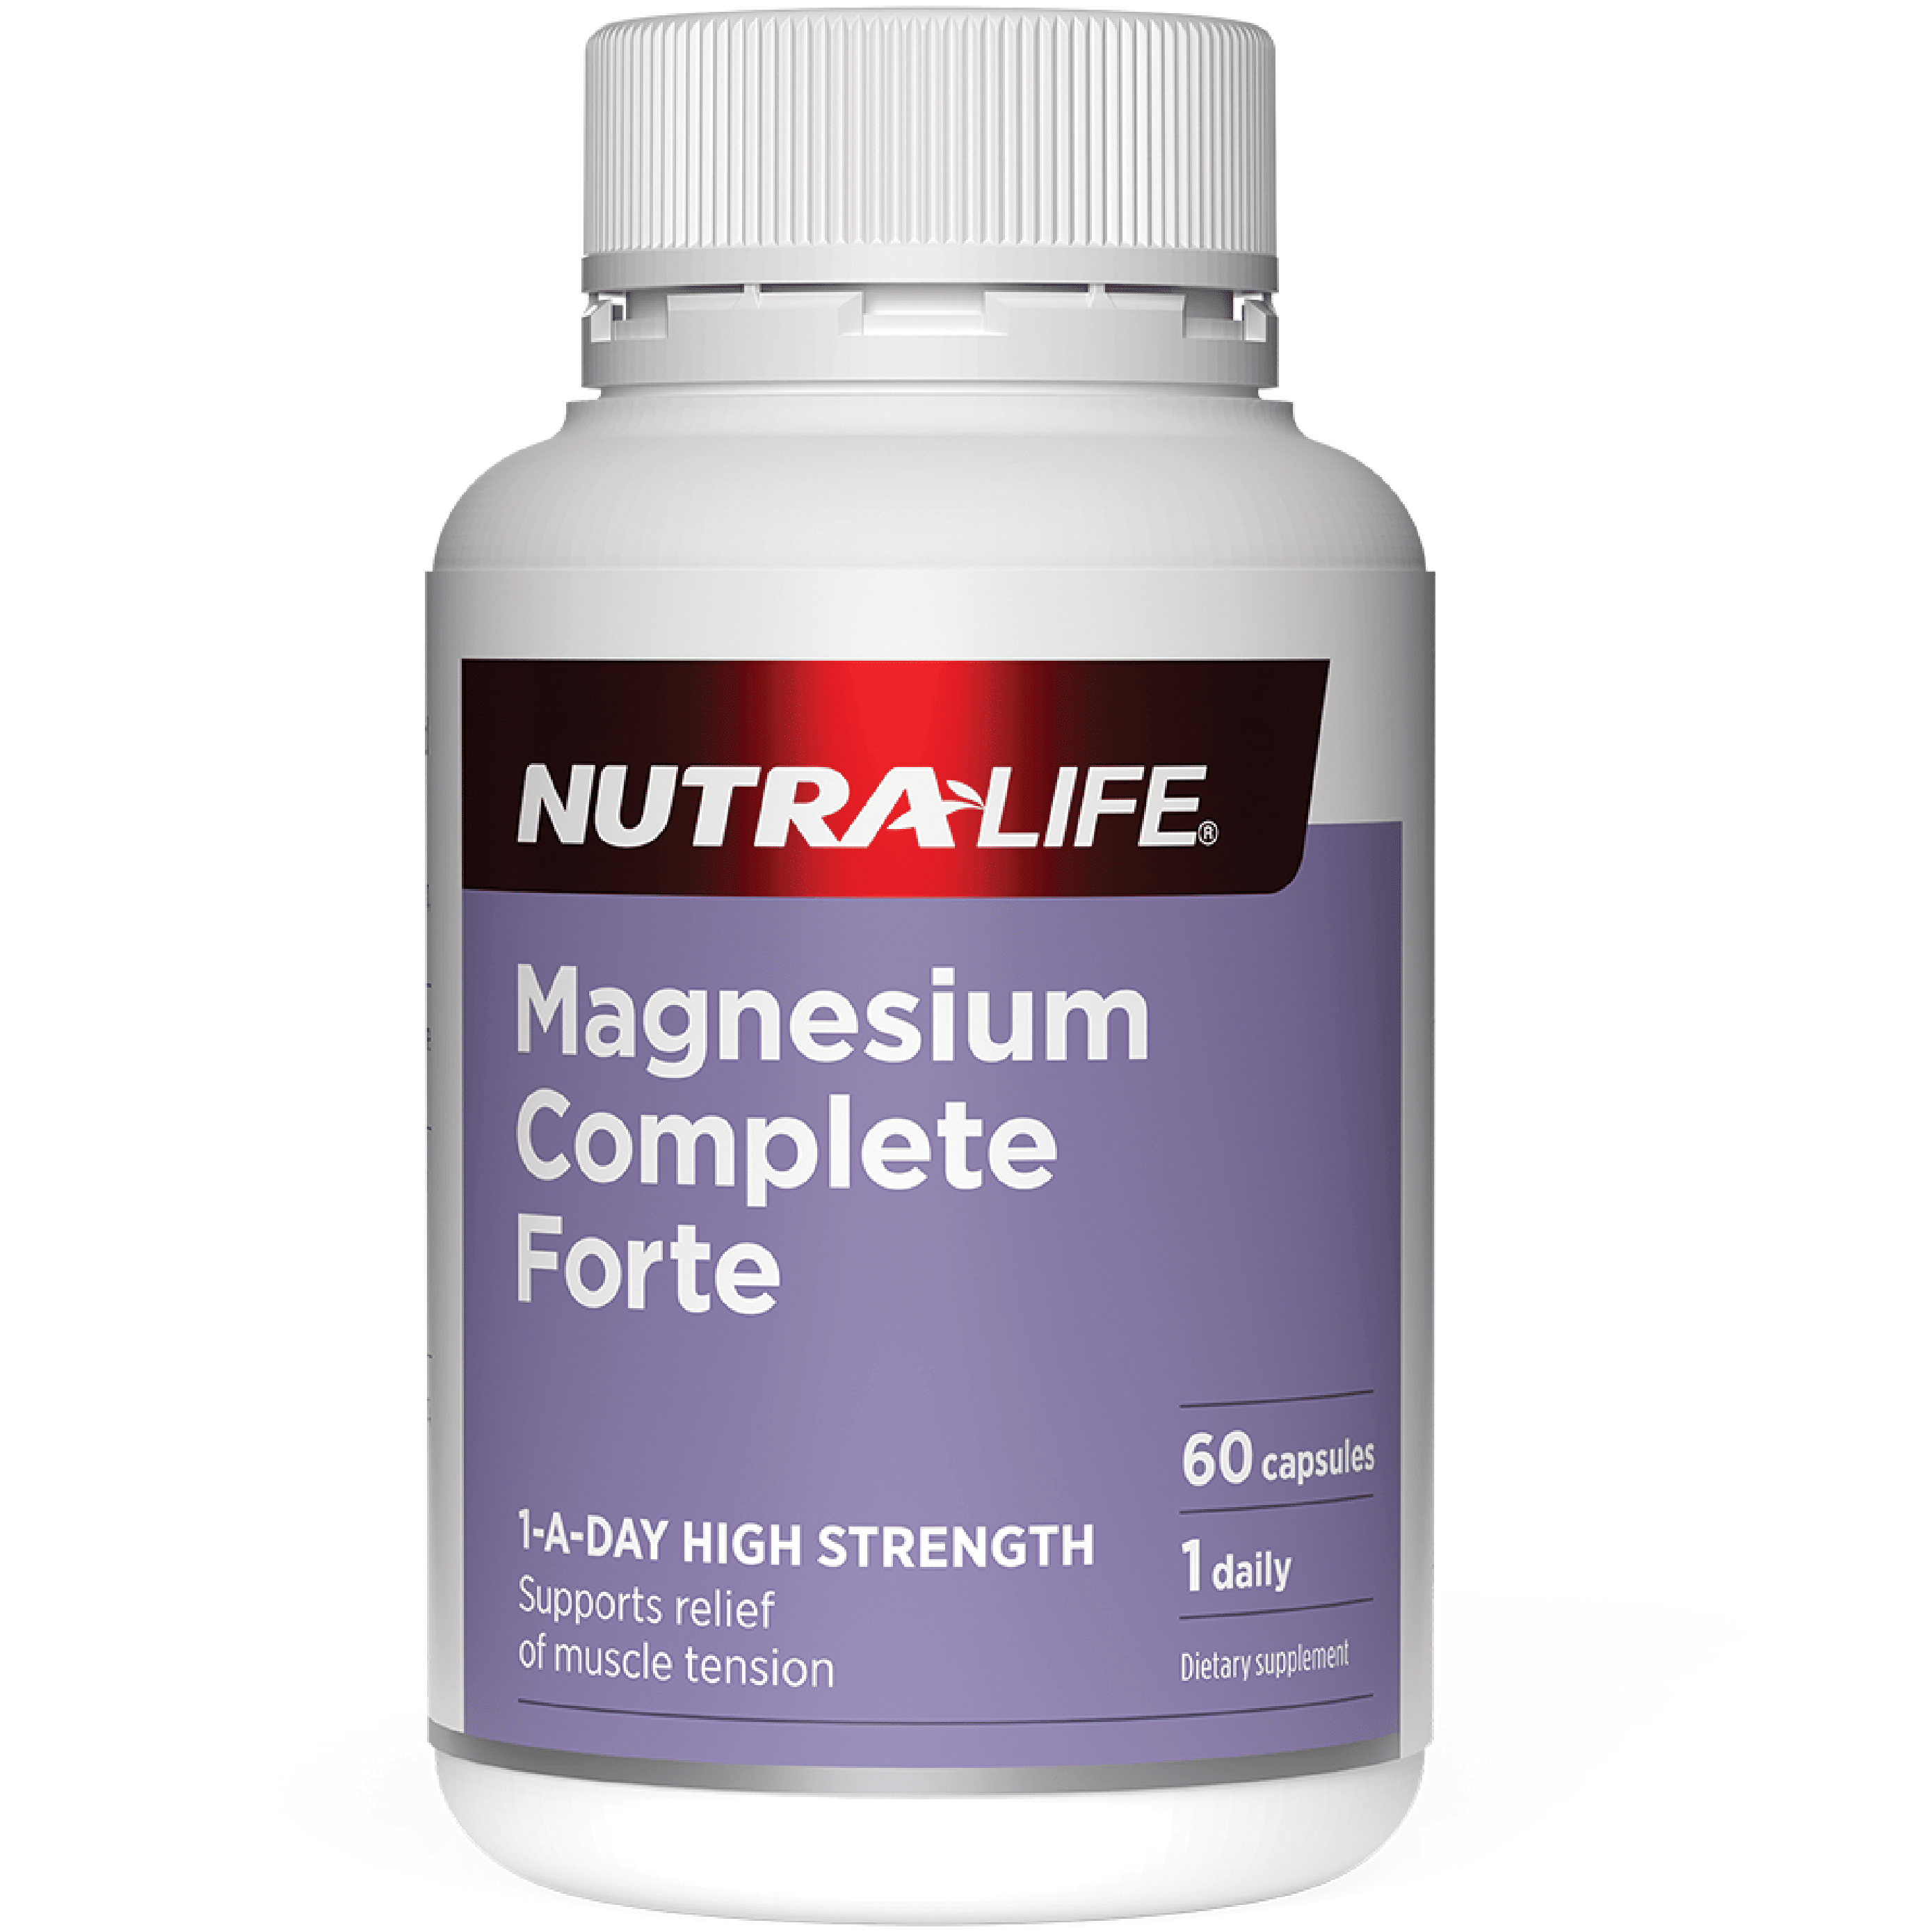 Nutra-Life Magnesium Complete Forte 60 Capsules